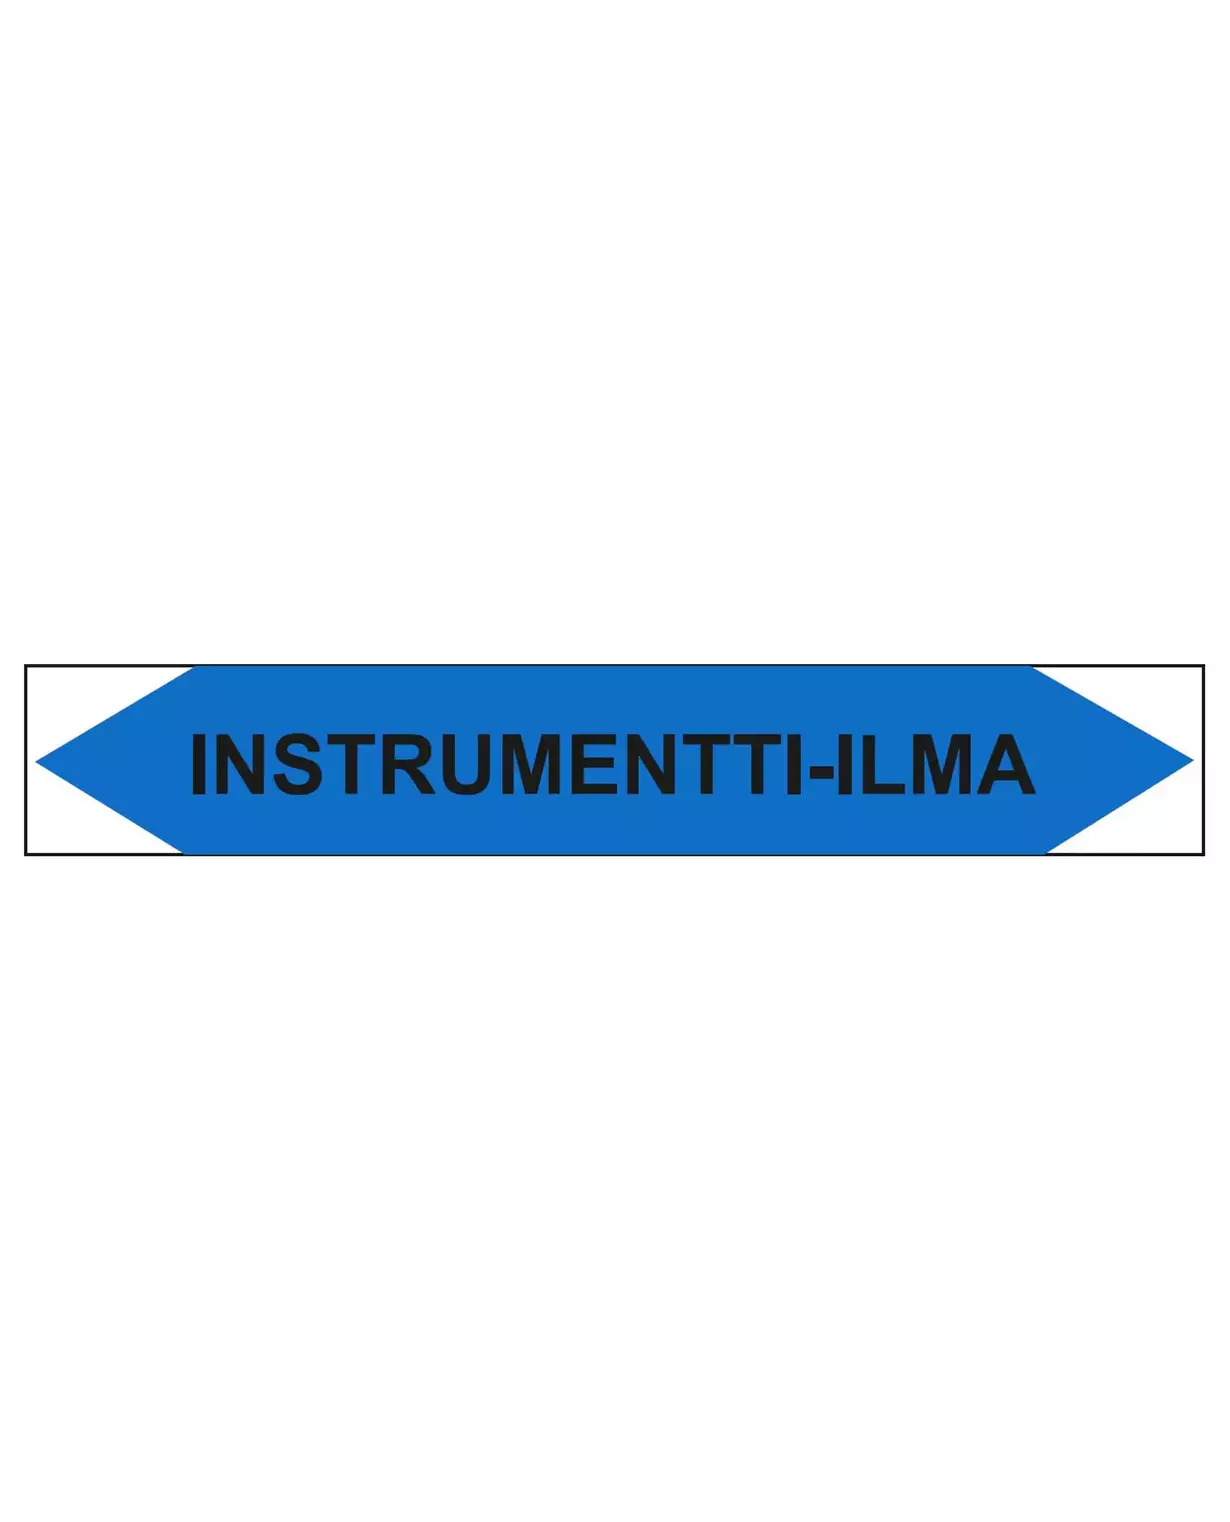 Instrumentti-ilma, 160x25 mm